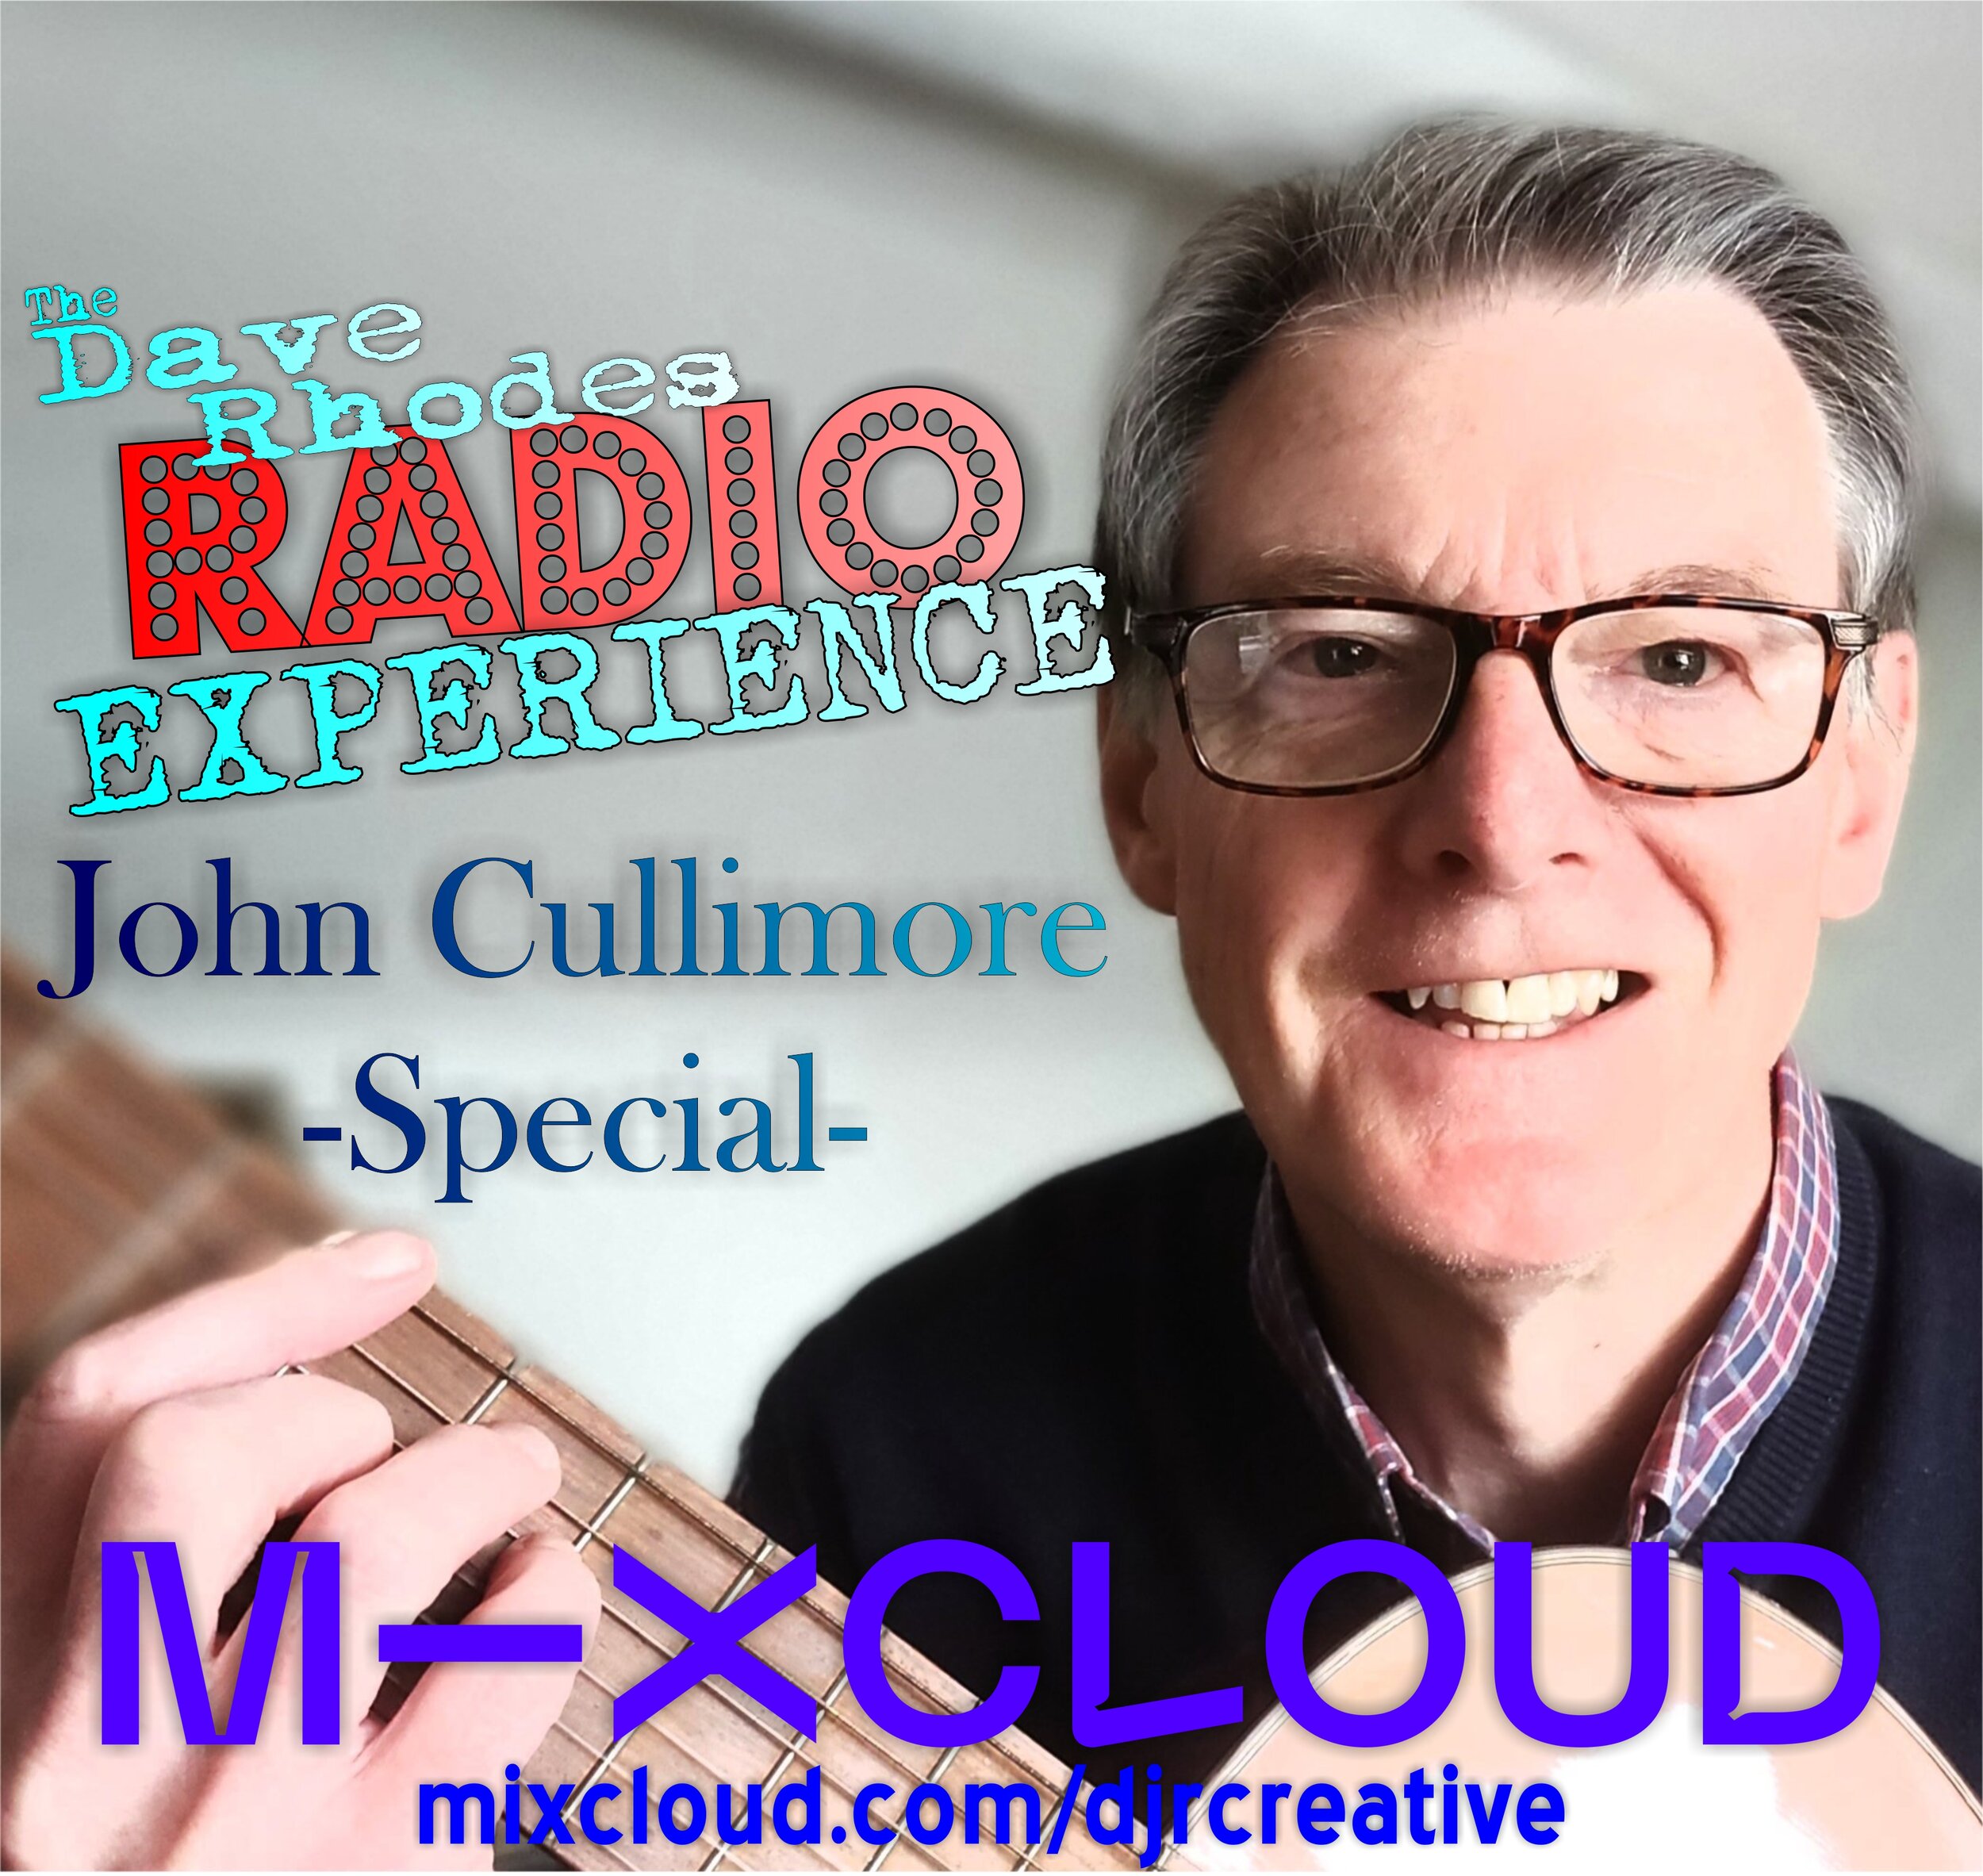 Radio Experiance 21 - 10 John Cullimore Mixcloud.jpg